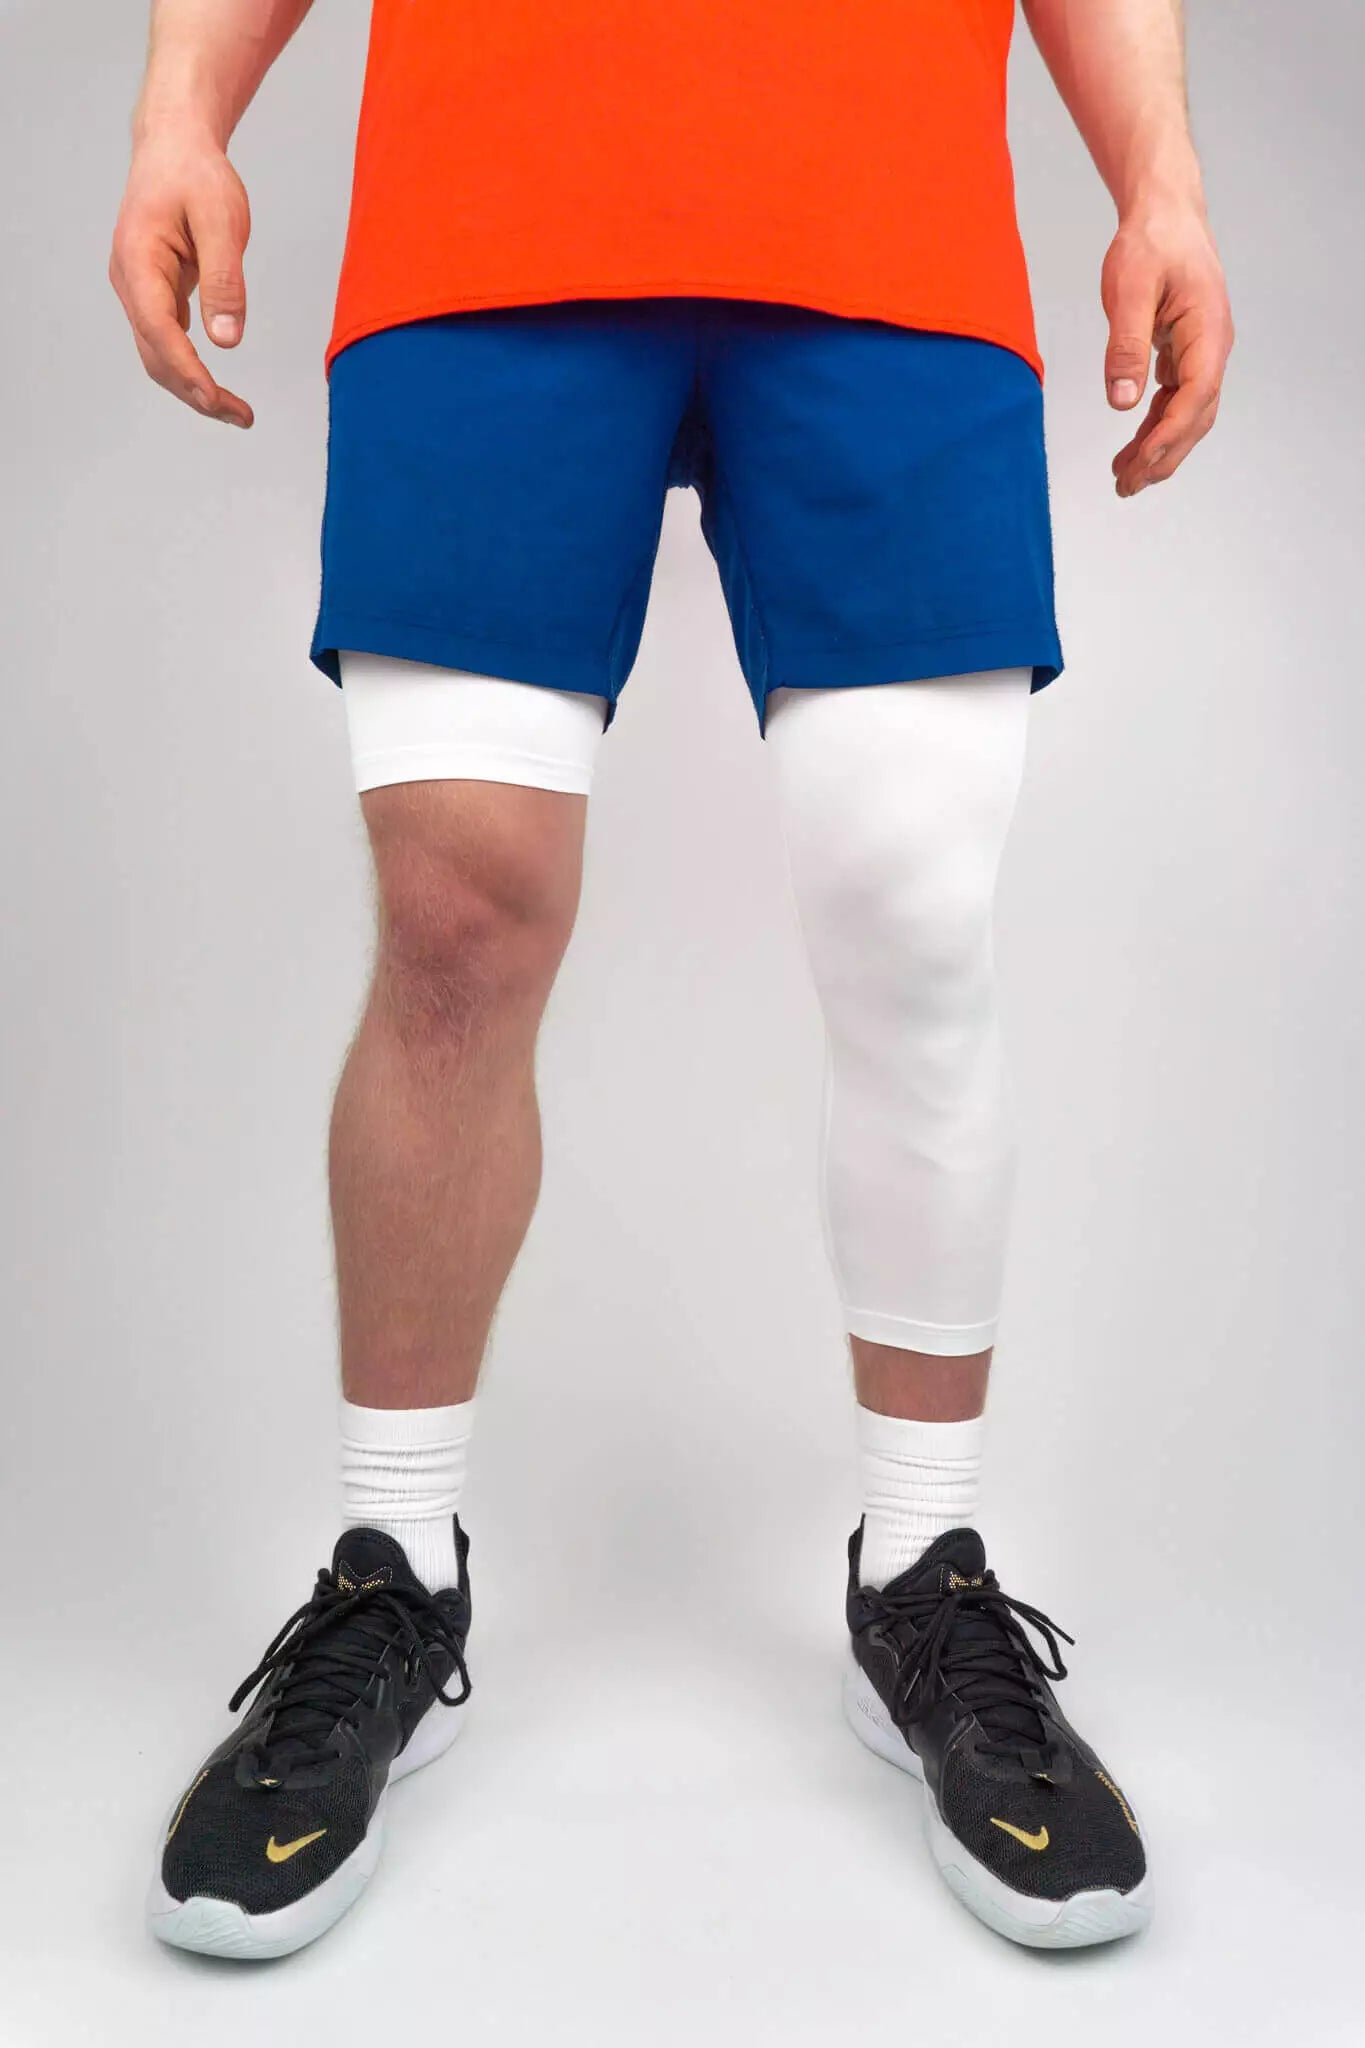 Men's Basketball Single Leg Tight Sports Pants 1/2 One Leg